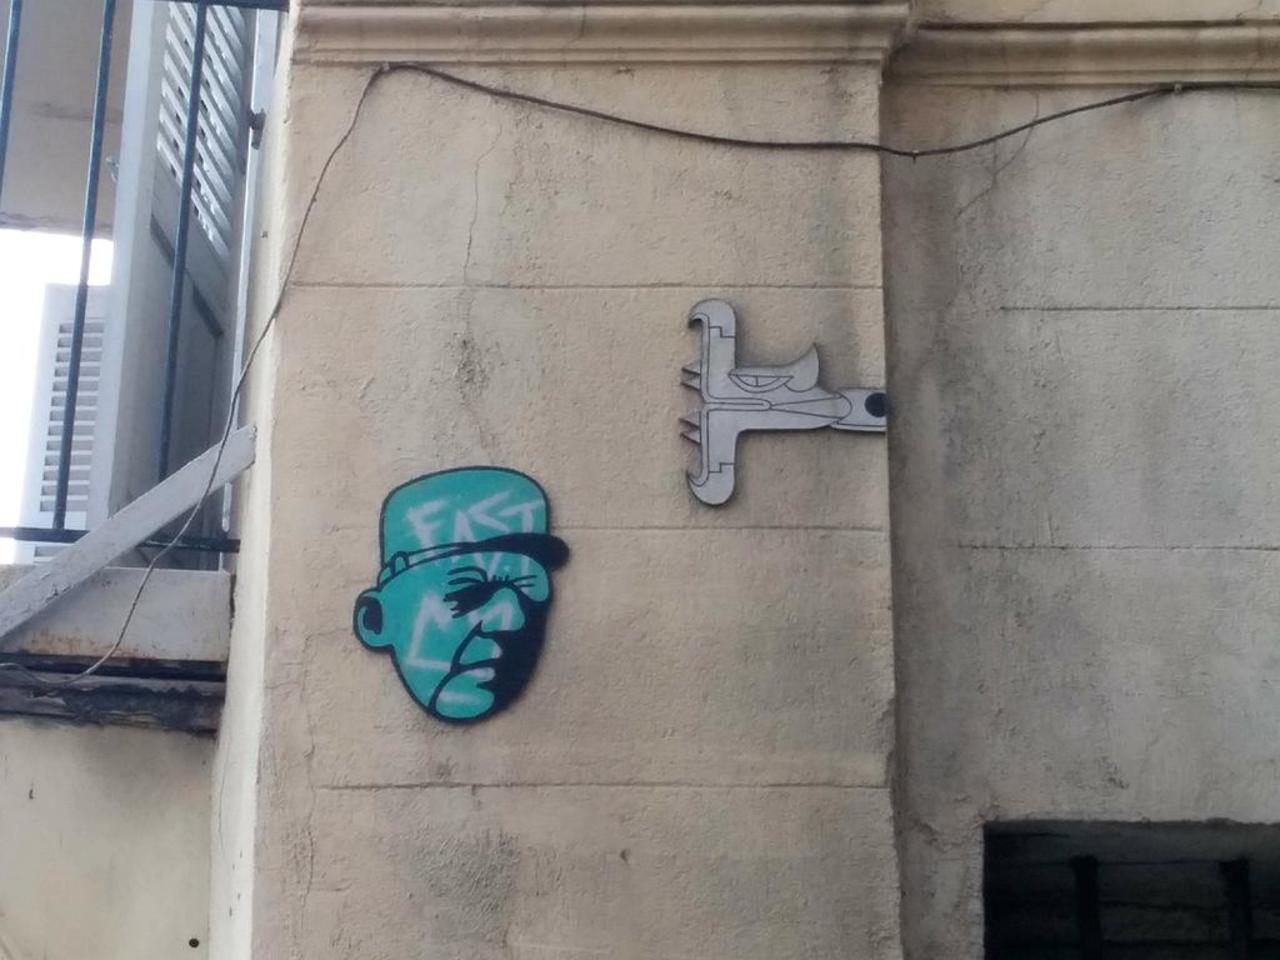 Street Art by anonymous in #Marseille http://www.urbacolors.com #art #mural #graffiti #streetart http://t.co/hJB9wxJfWN